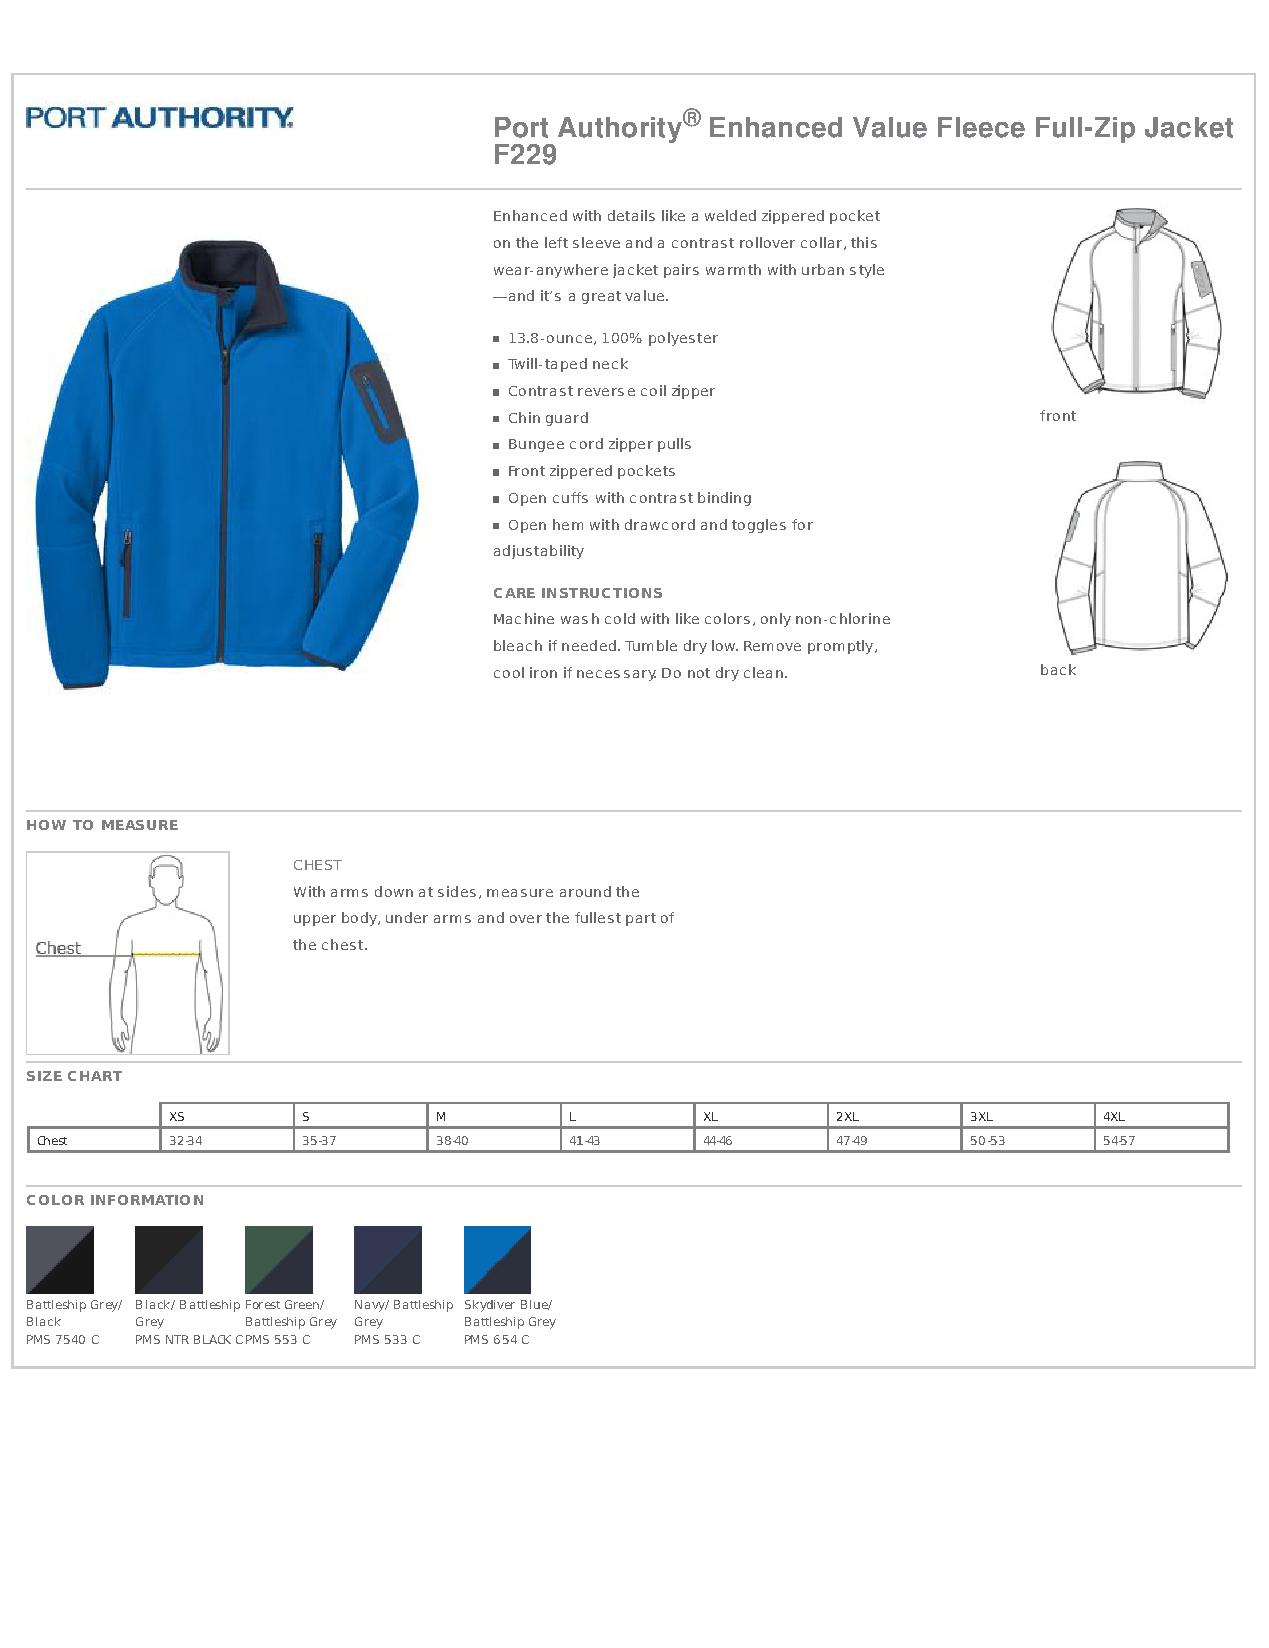 Port Authority F229 Enhanced Value Fleece Full-Zip Jacket - Outerwear